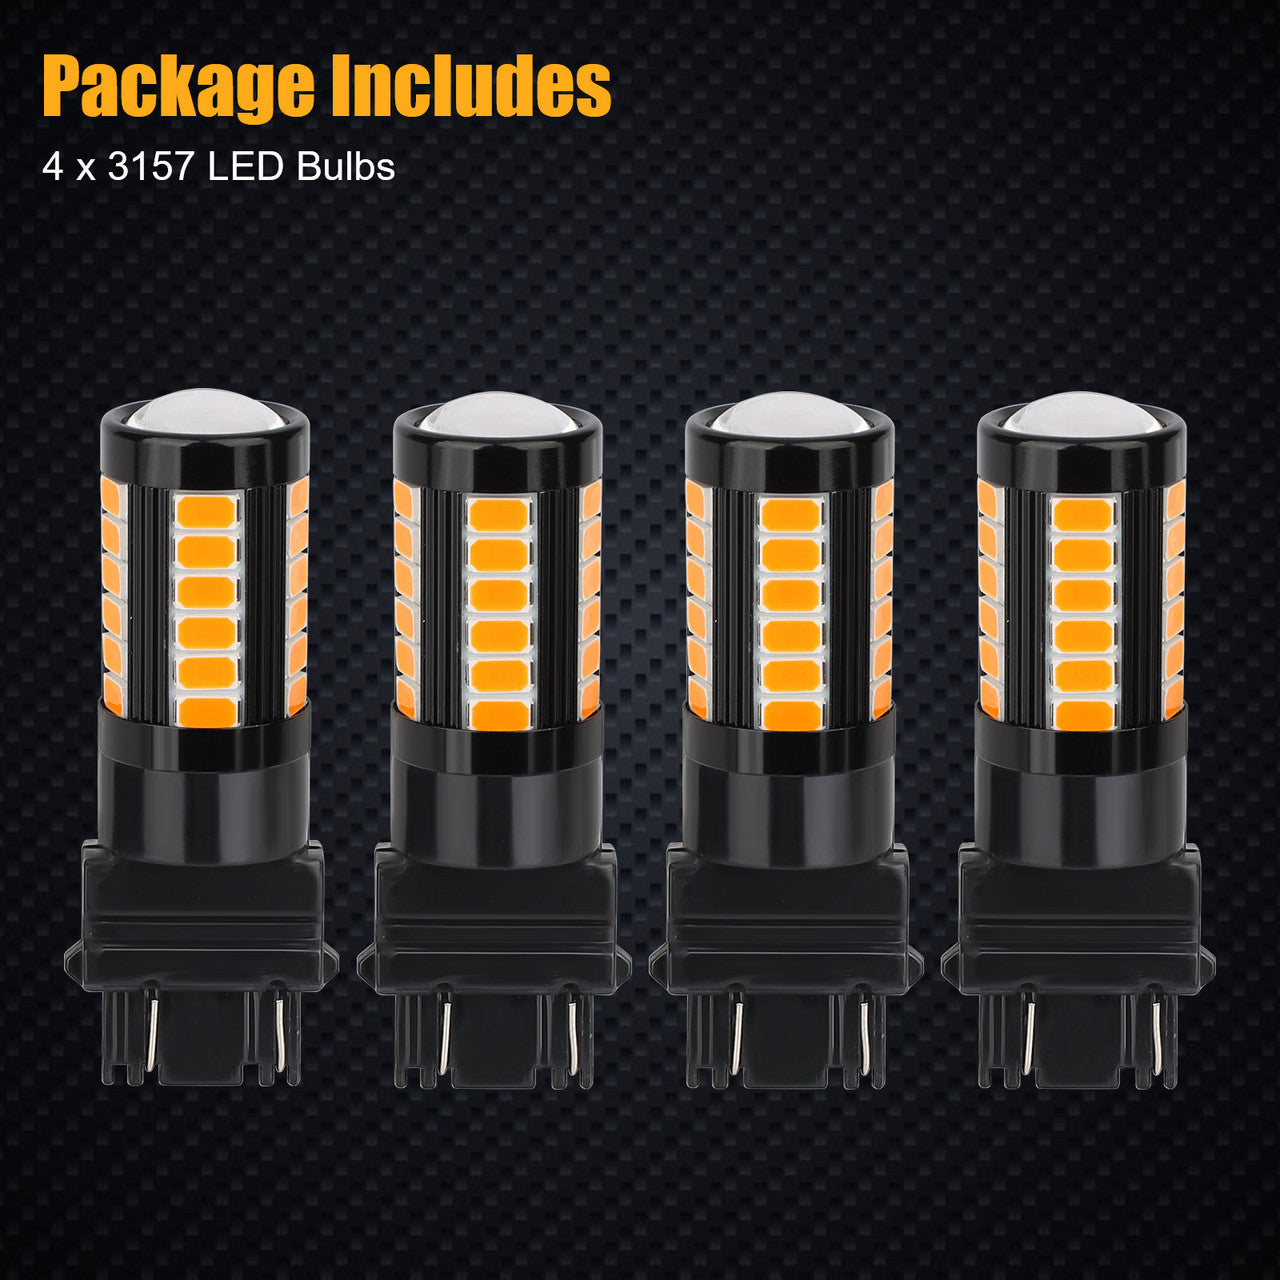 4 Pcs 3157 Turn LED Signal Light - Super Bright 12V 3000K Bulbs for Backup, Reverse, Tail, Parking,Side marker light 33-SMD (Amber)